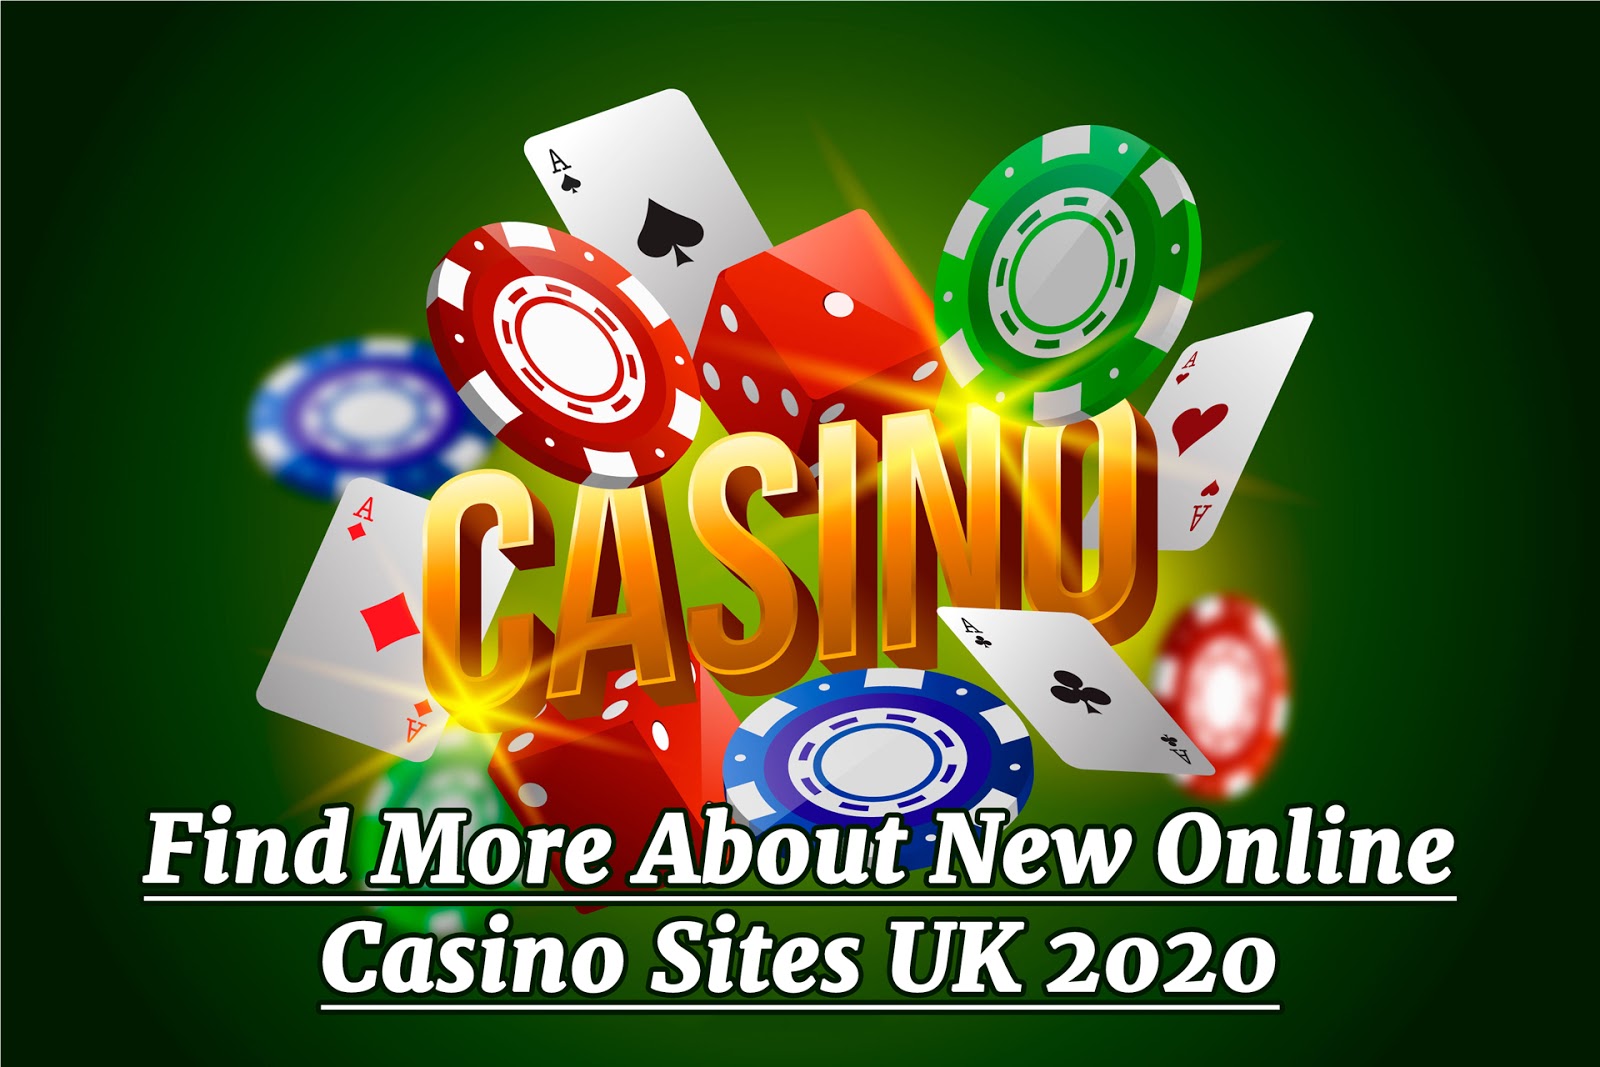 New Online Casino Sites UK 2020